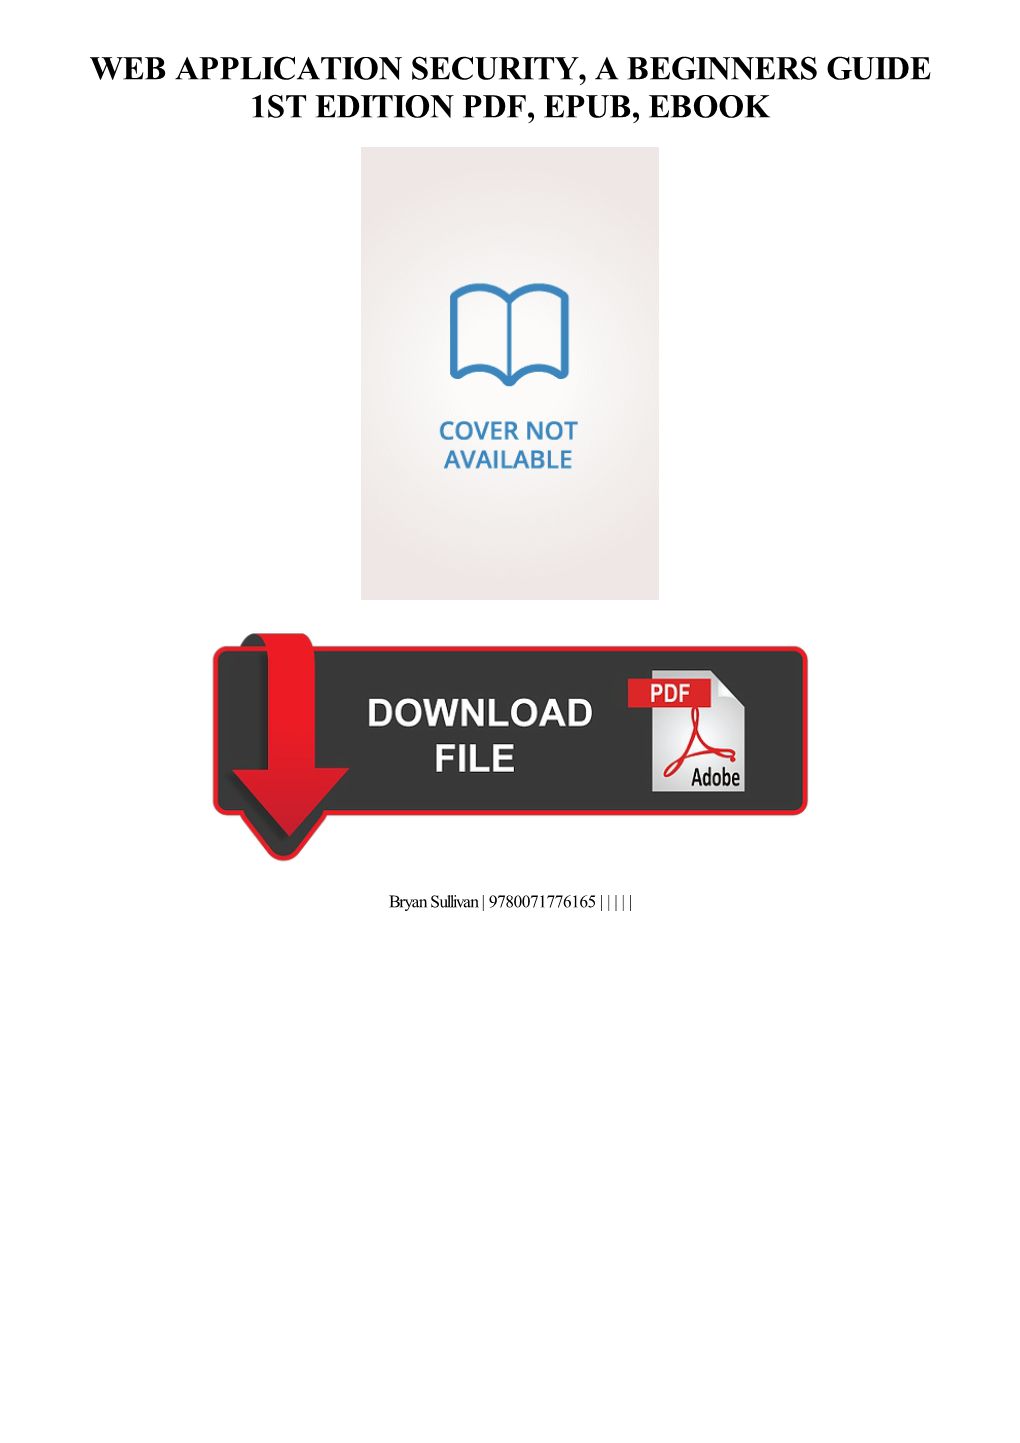 Web Application Security, a Beginners Guide 1St Edition Pdf, Epub, Ebook